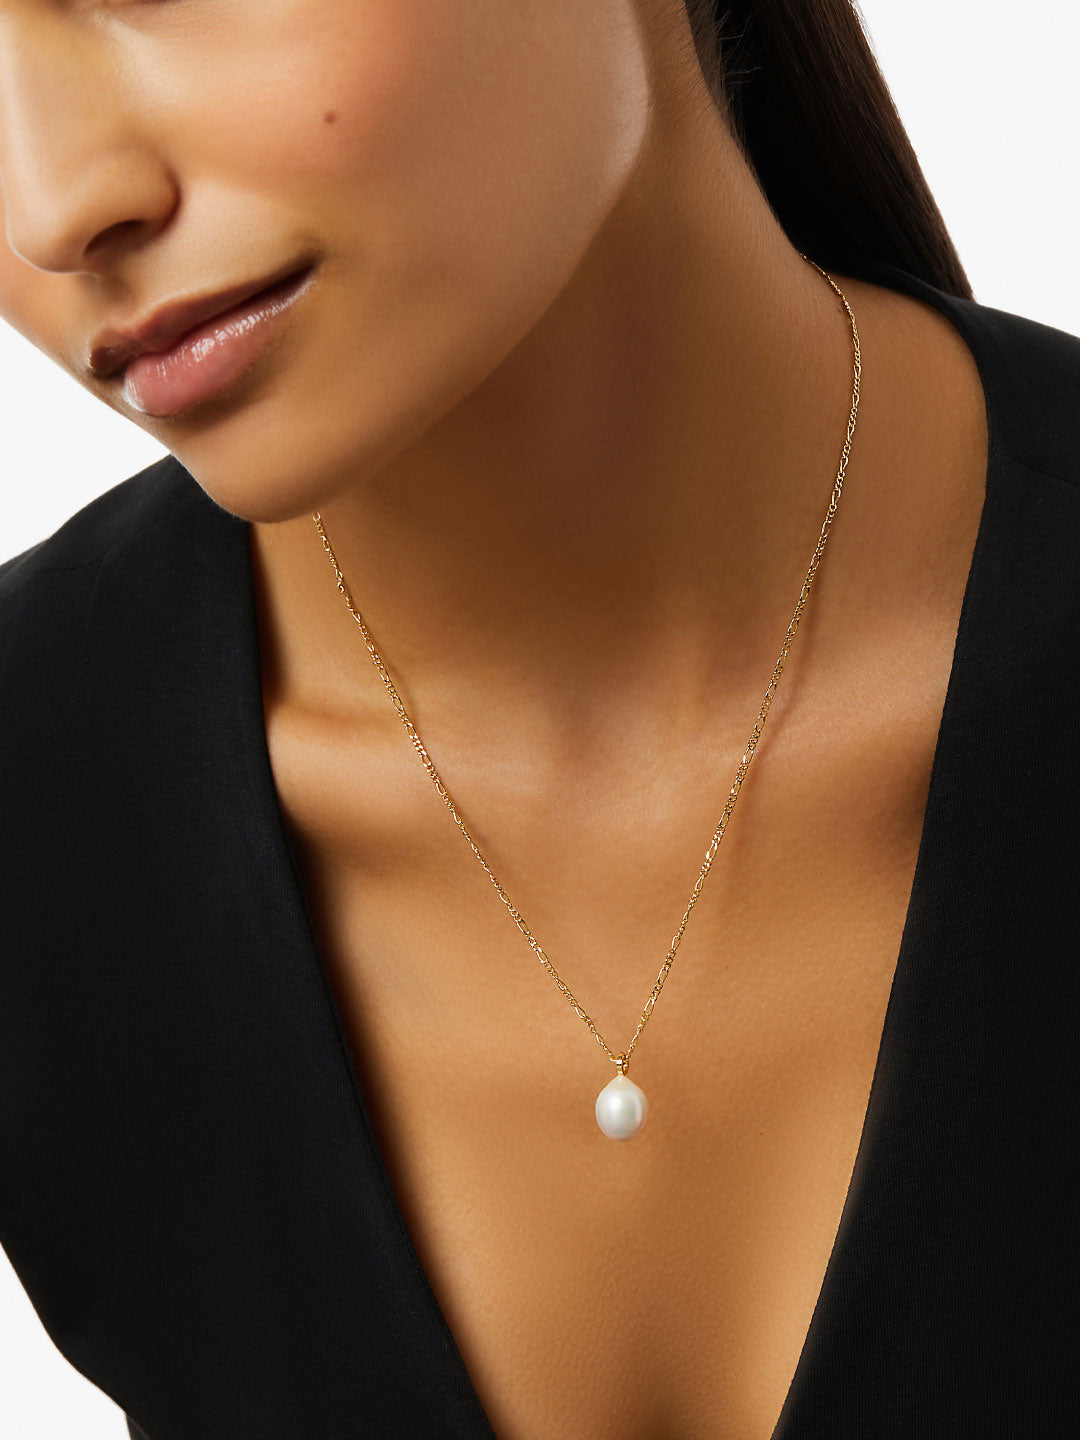 Ana Luisa Jewelry Necklaces Pendants Pearl Pendant Necklace Marina Gold